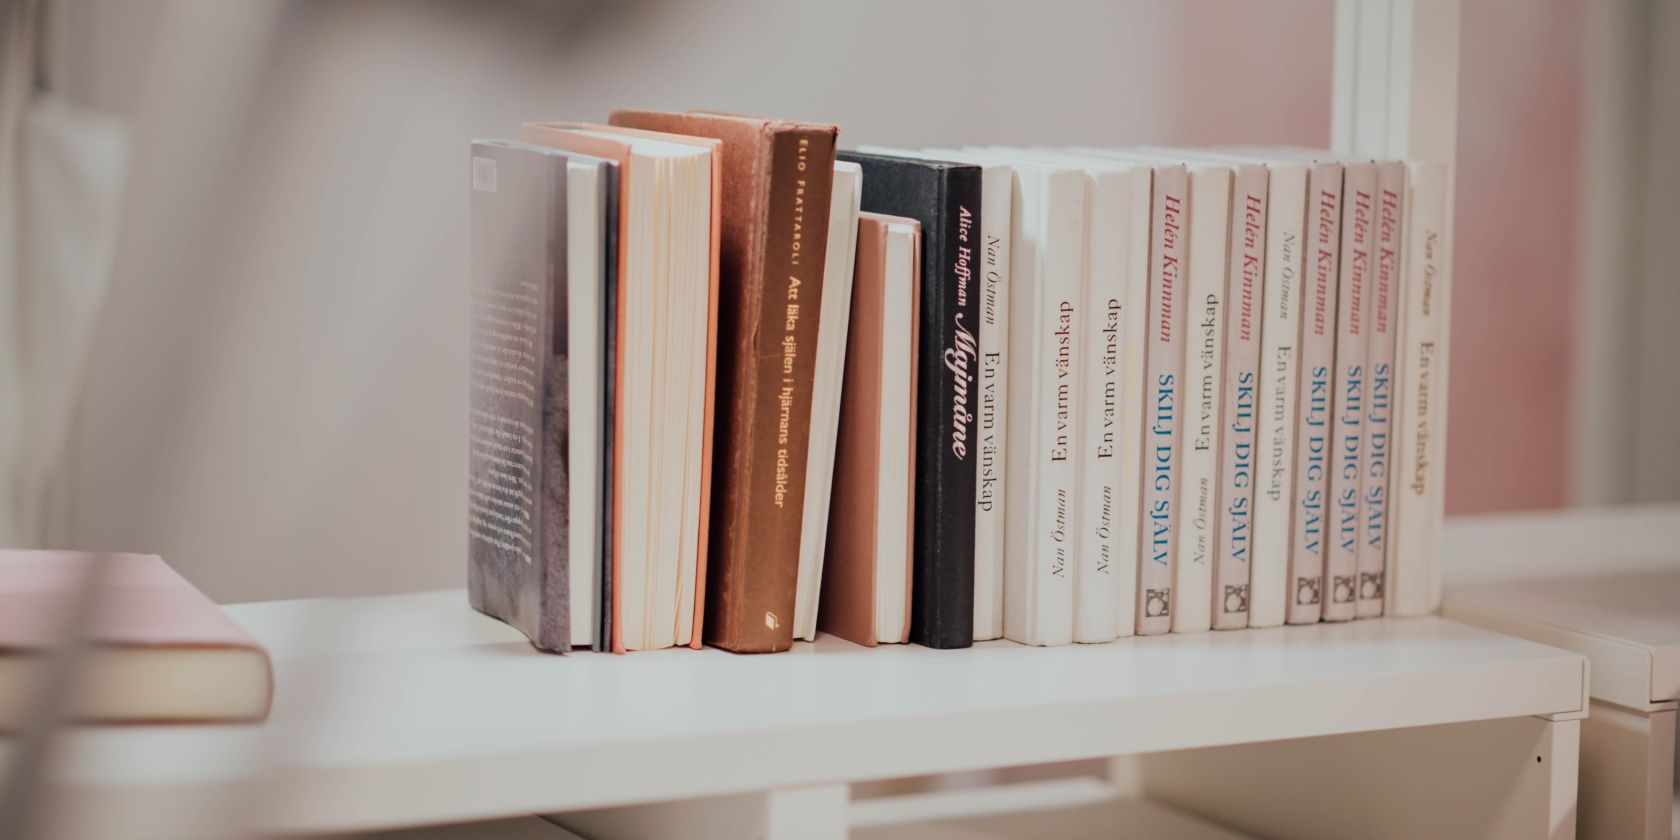 Books sitting on a shelf